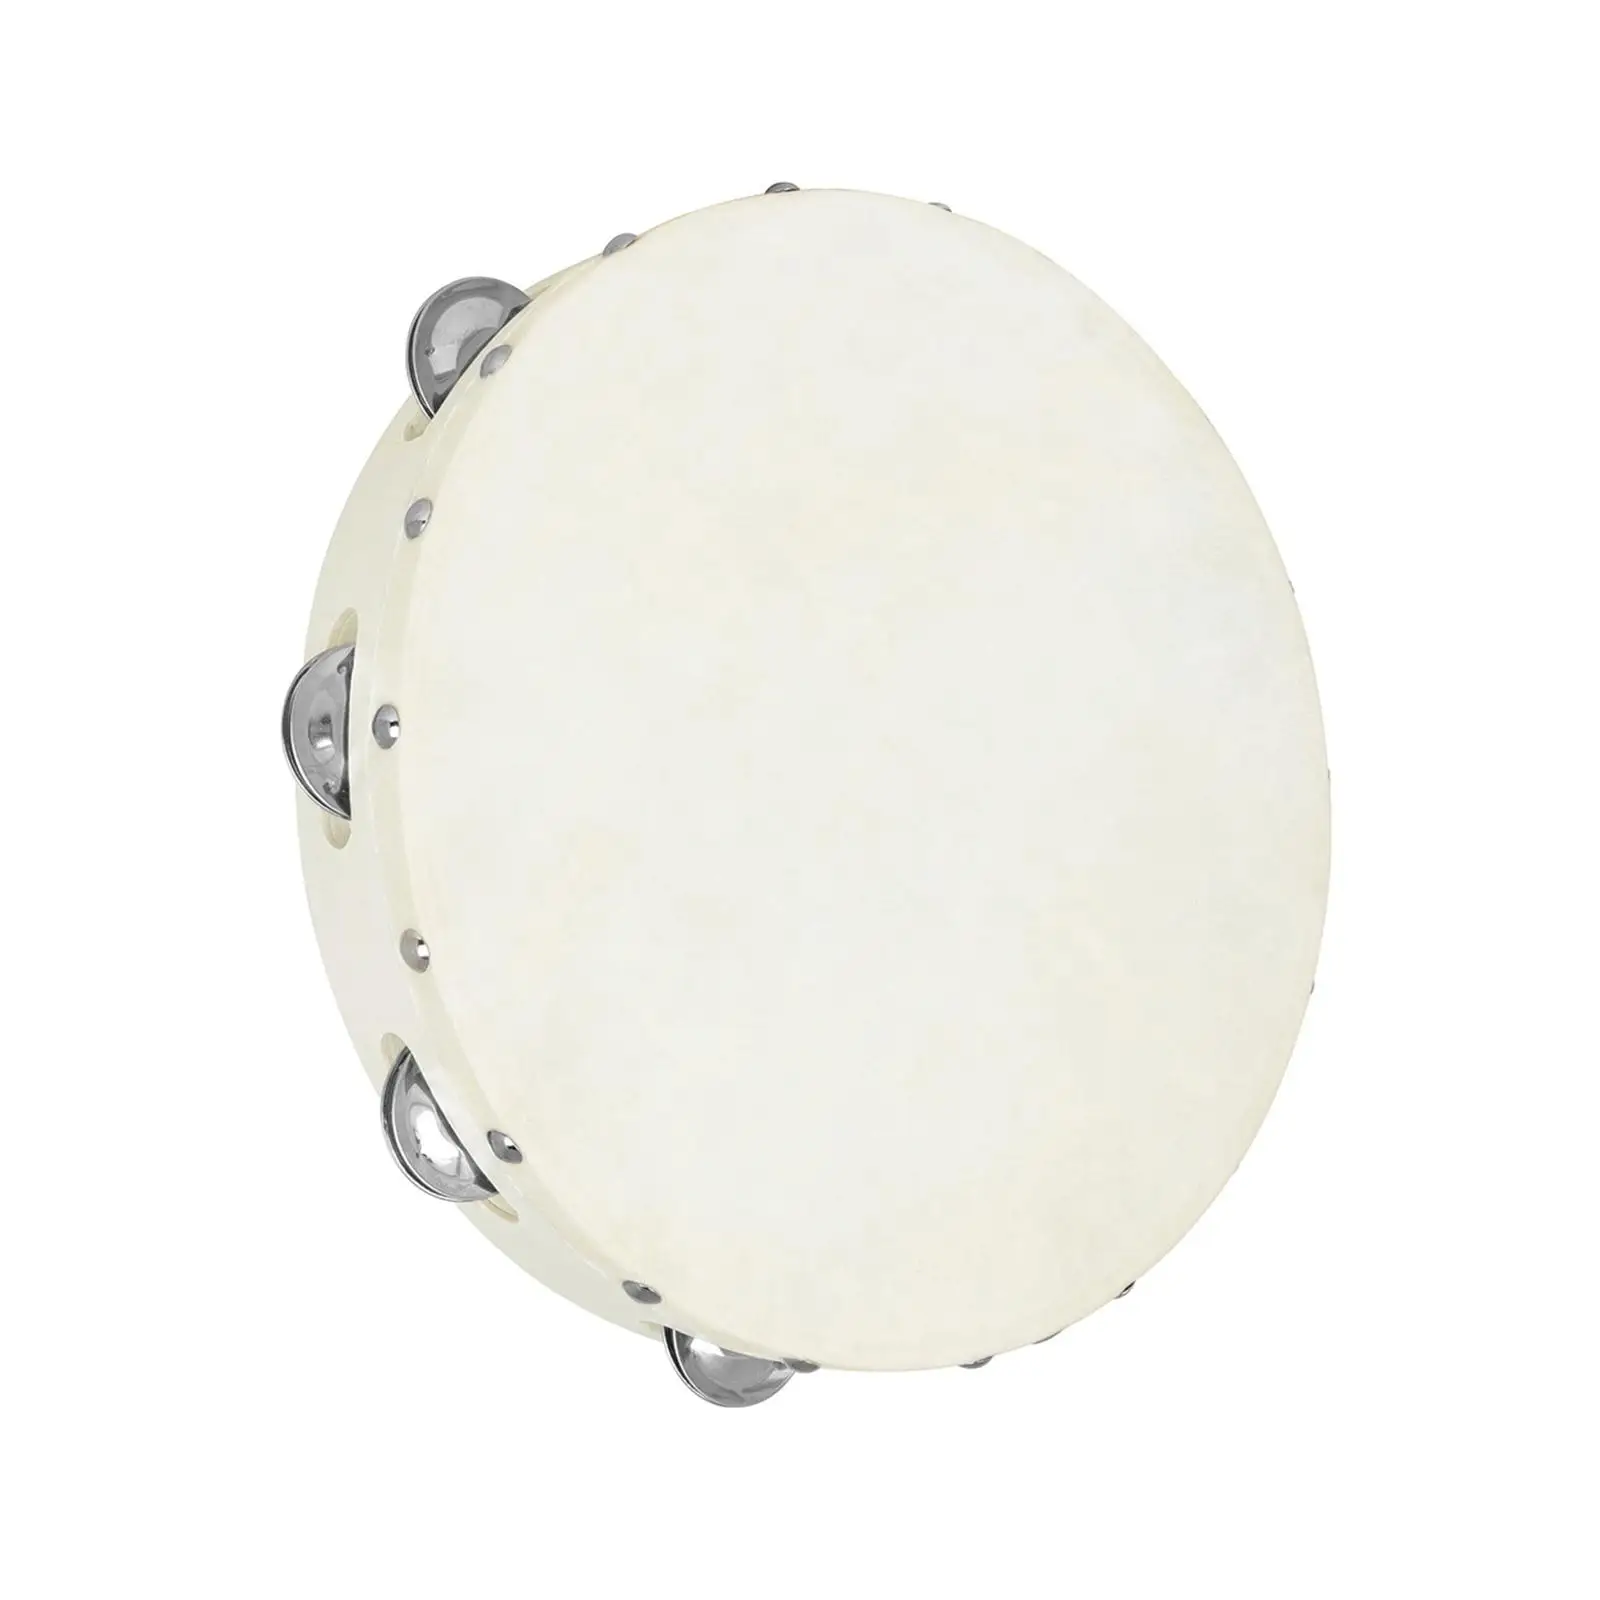 Tambourine Hand Drum Educational Musical Instrument for KTV Children Adults